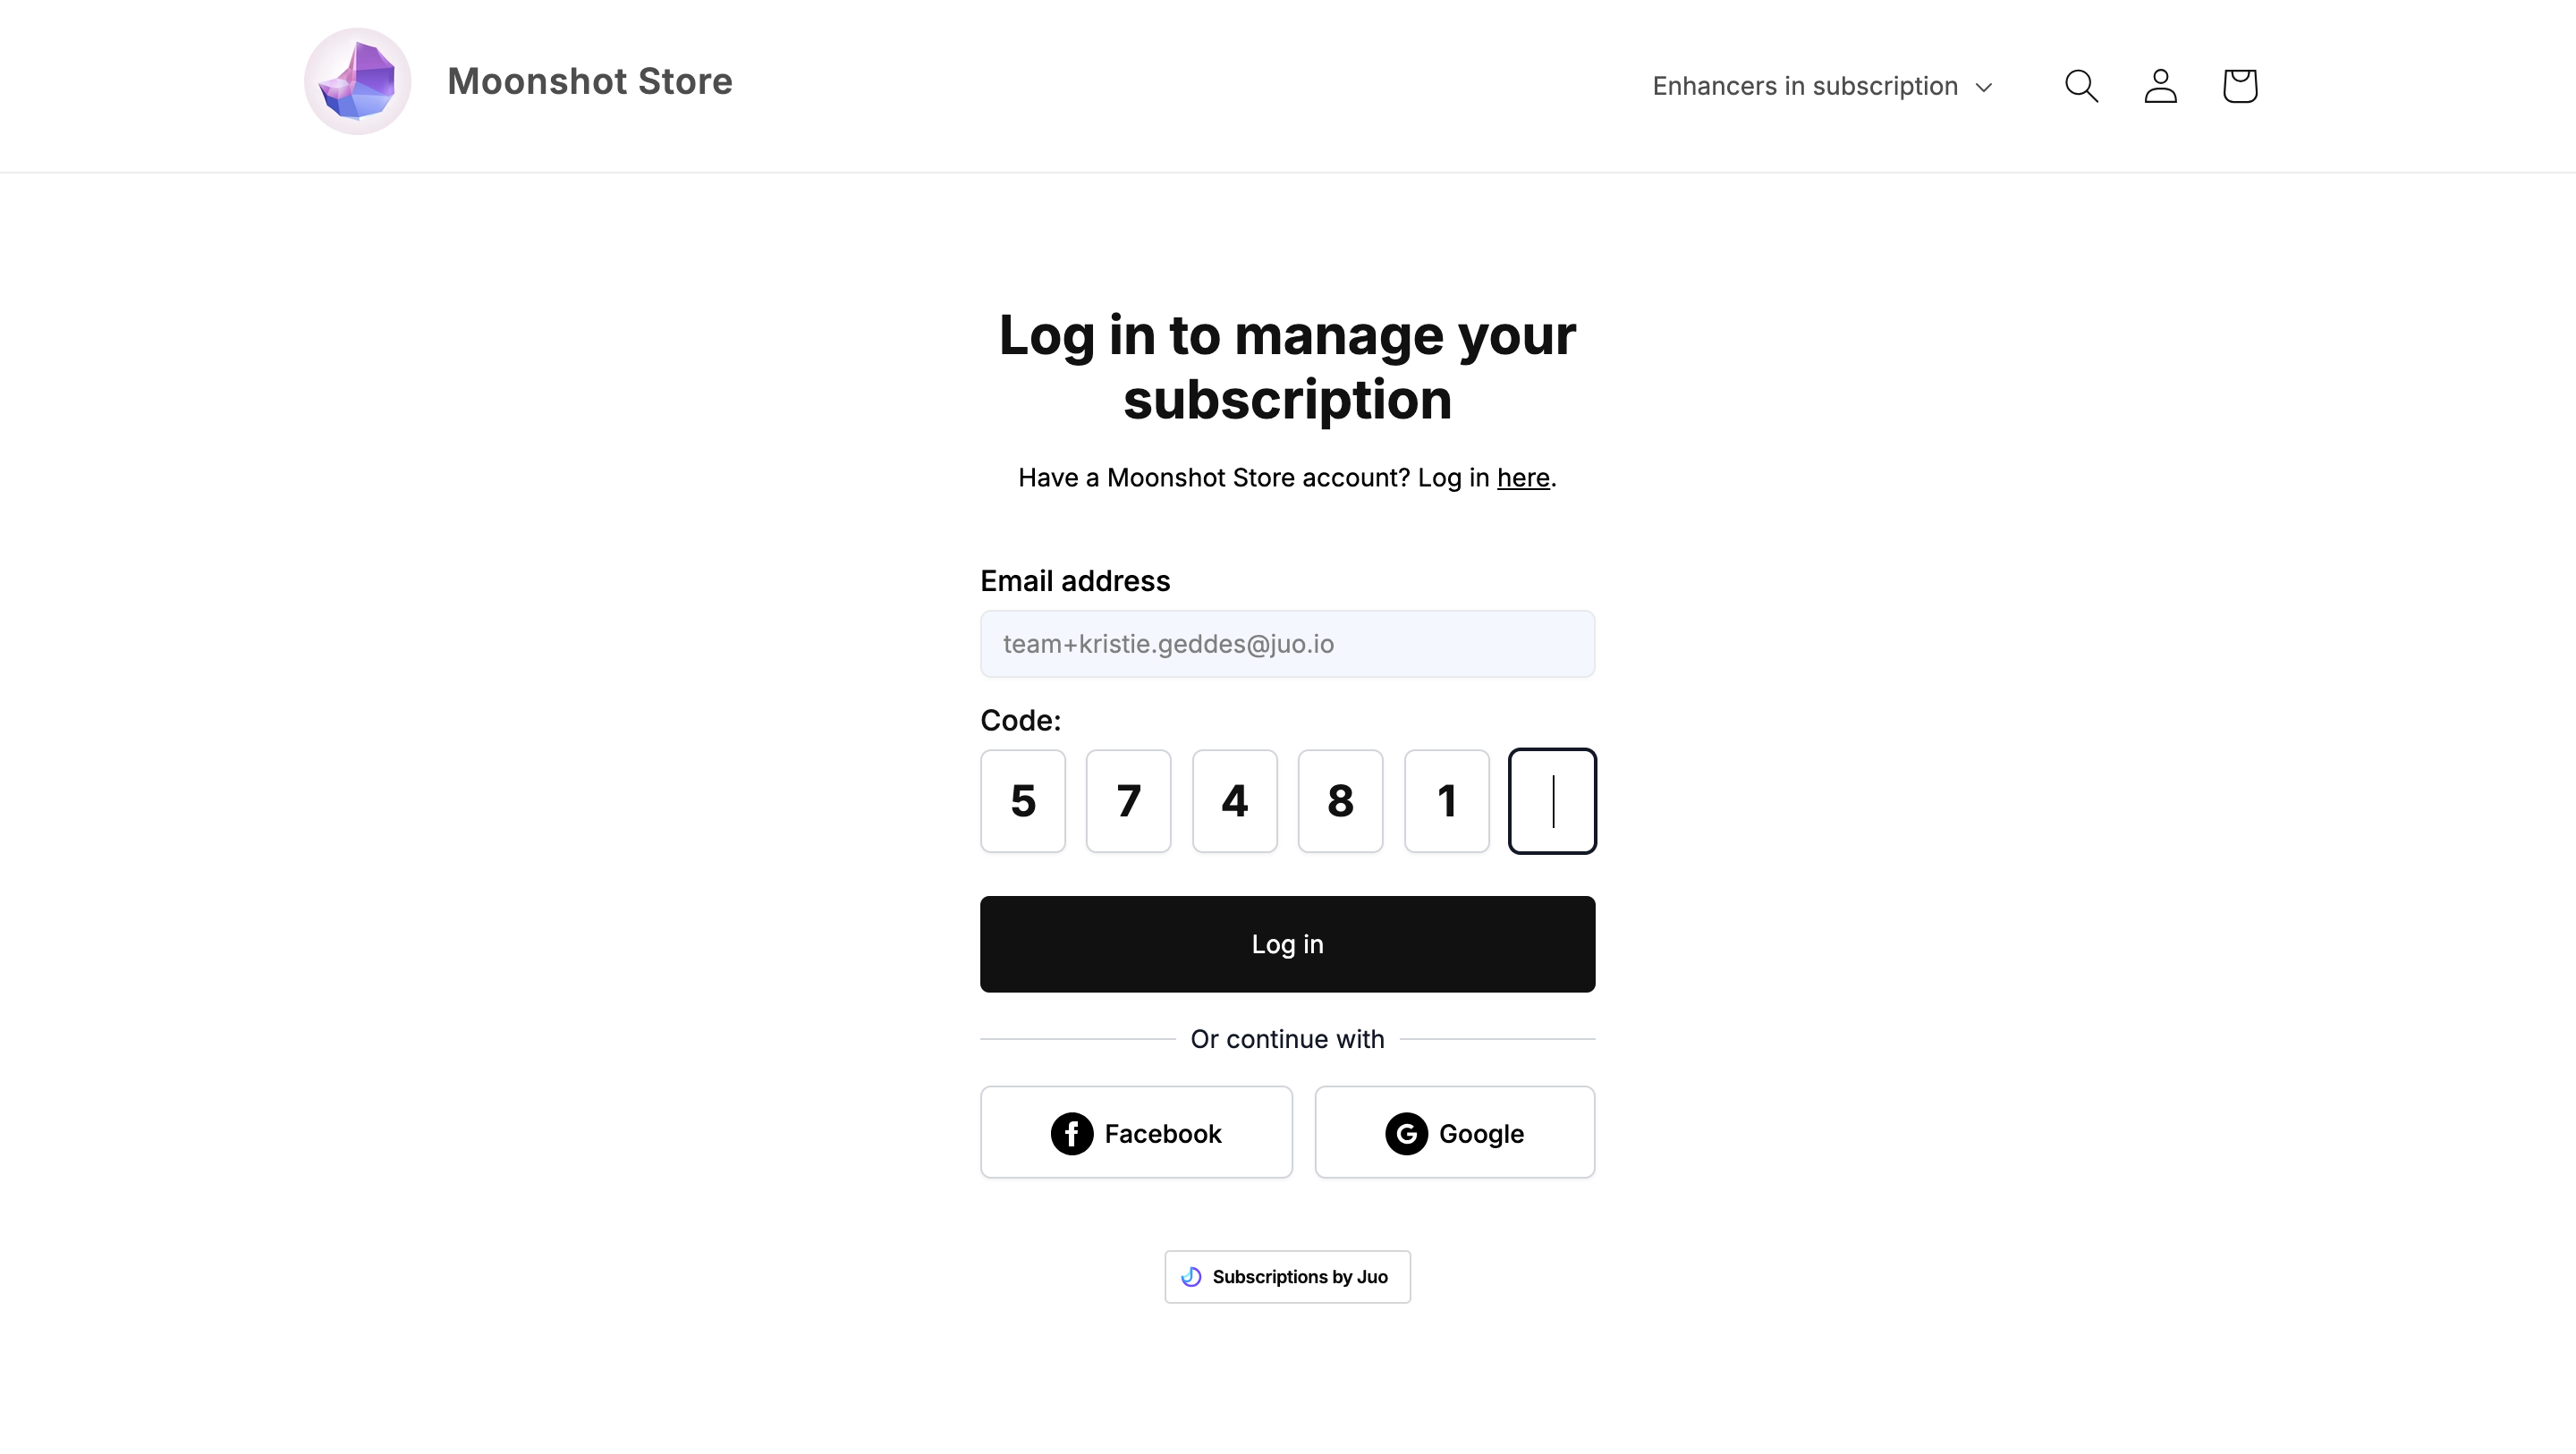 Customer Portal login - single-use code 